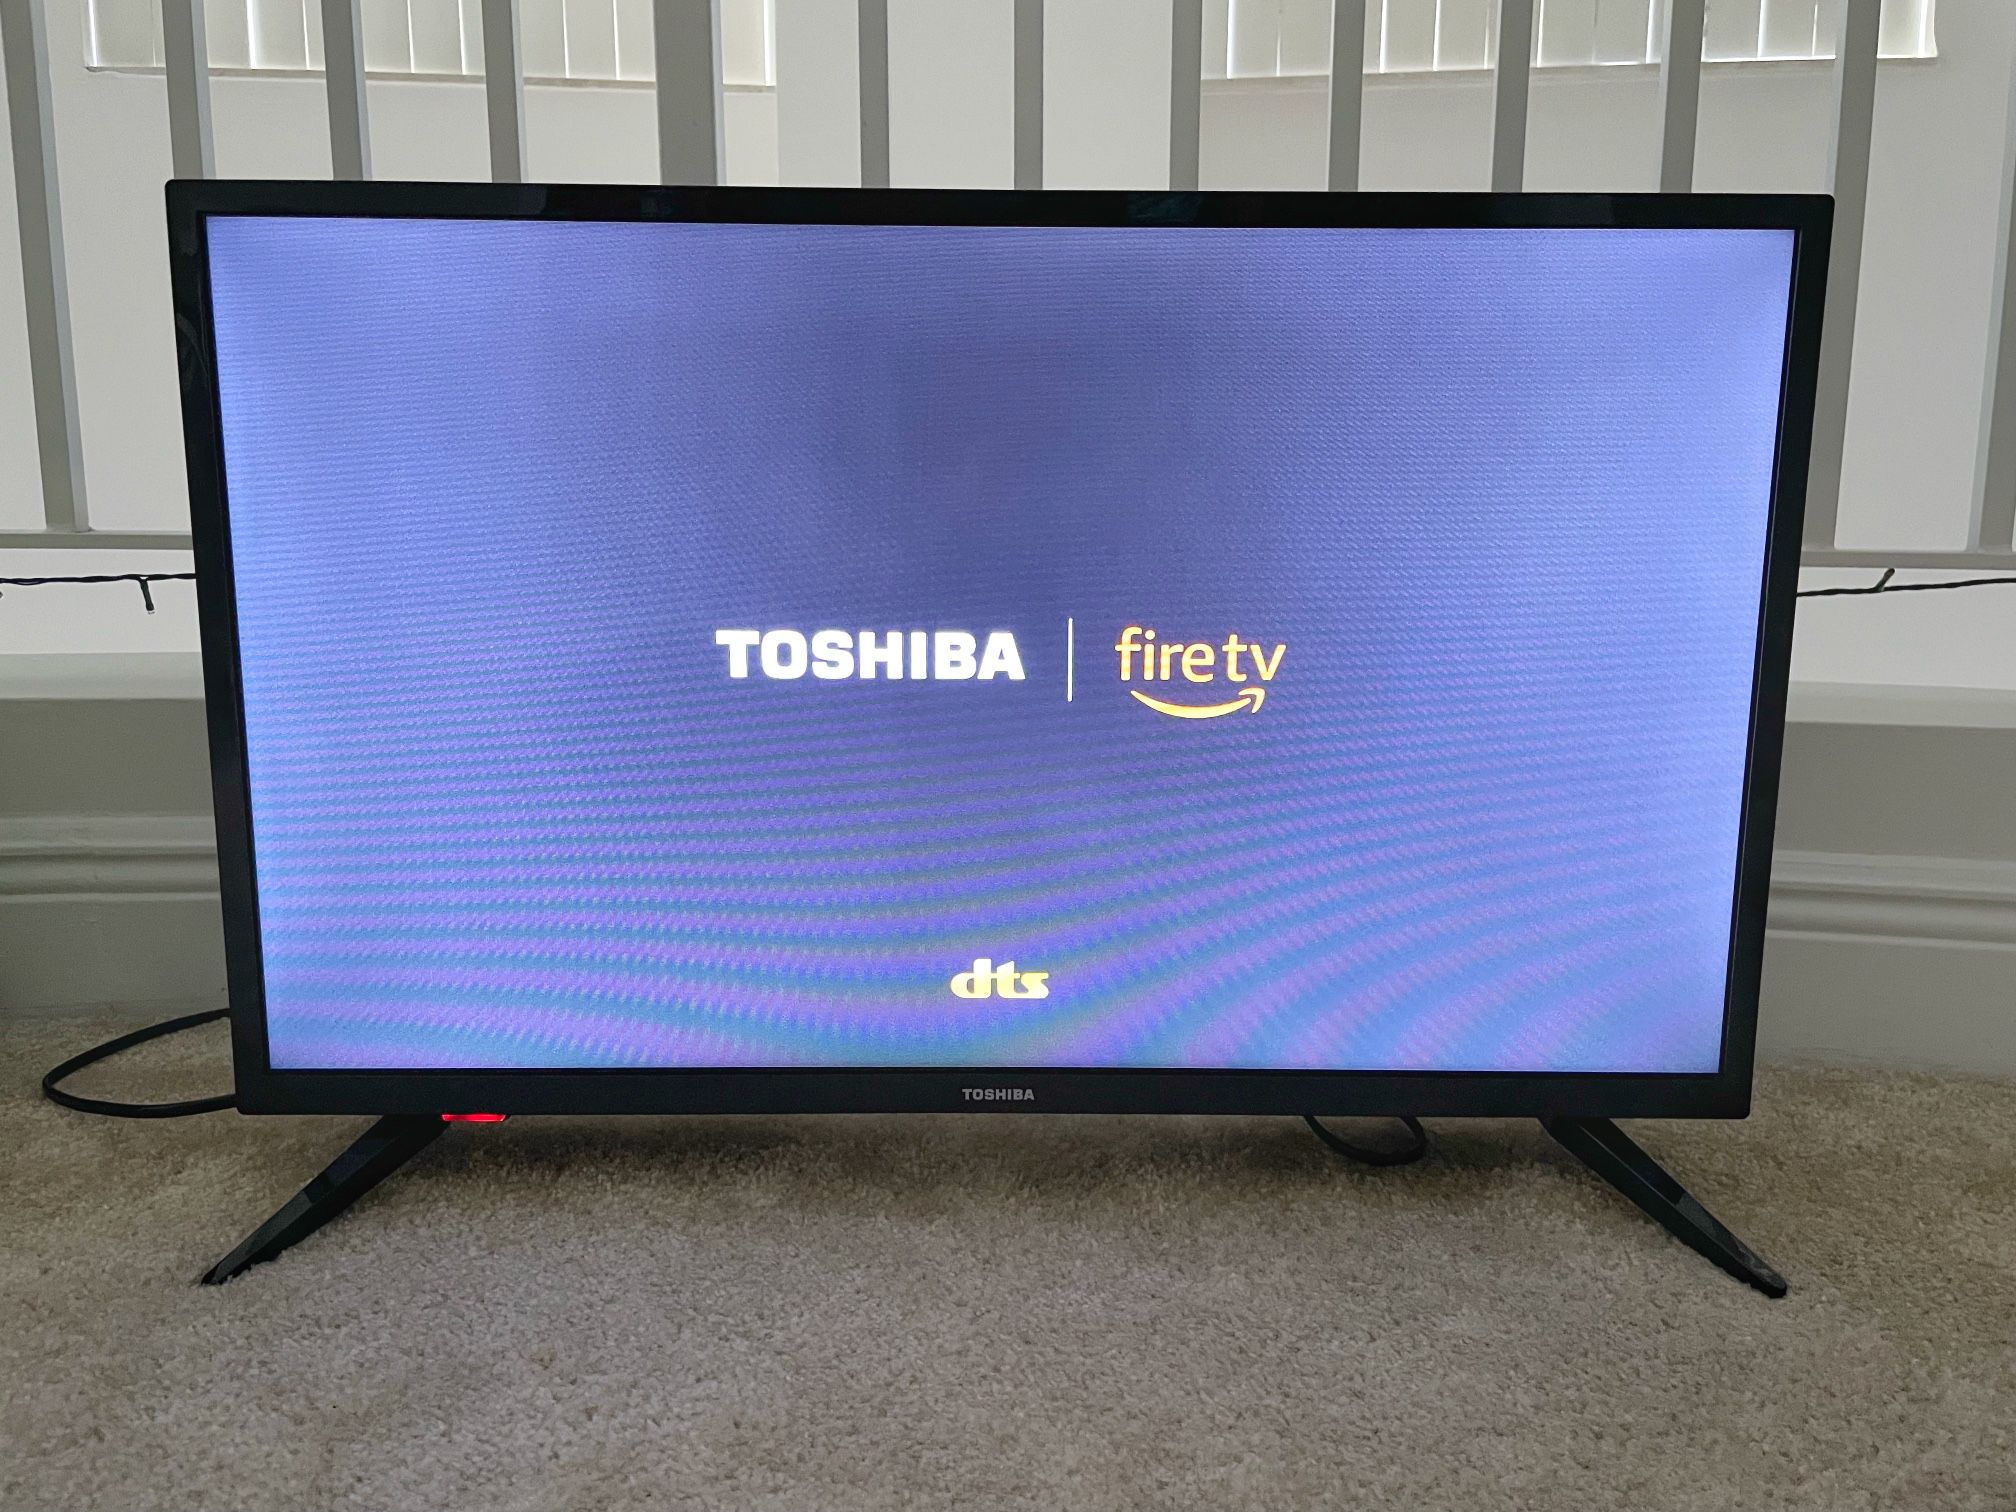  Toshiba 32LF221U21 31.5-inch Smart HD 720p TV - Fire TV,  Released 2020 : Electrónica